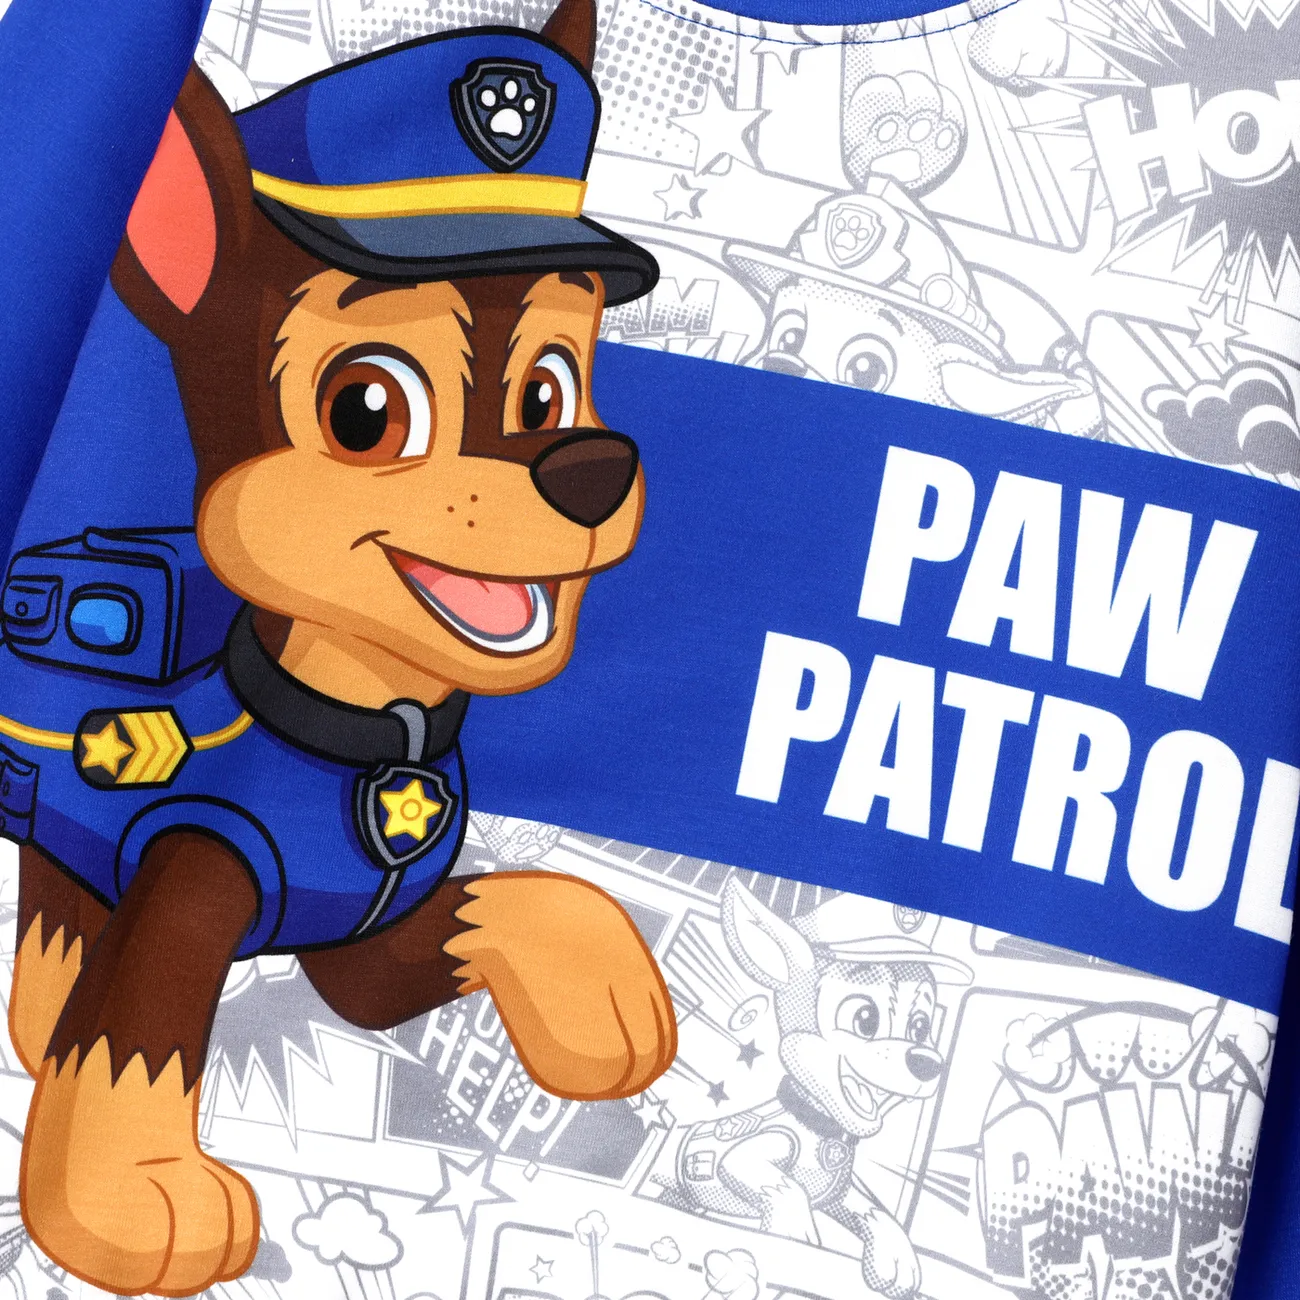 PAW Patrol 2pcs Toddler Girl/Boy Character Print Pullover Sweatshirt and Pants Set Blue big image 1